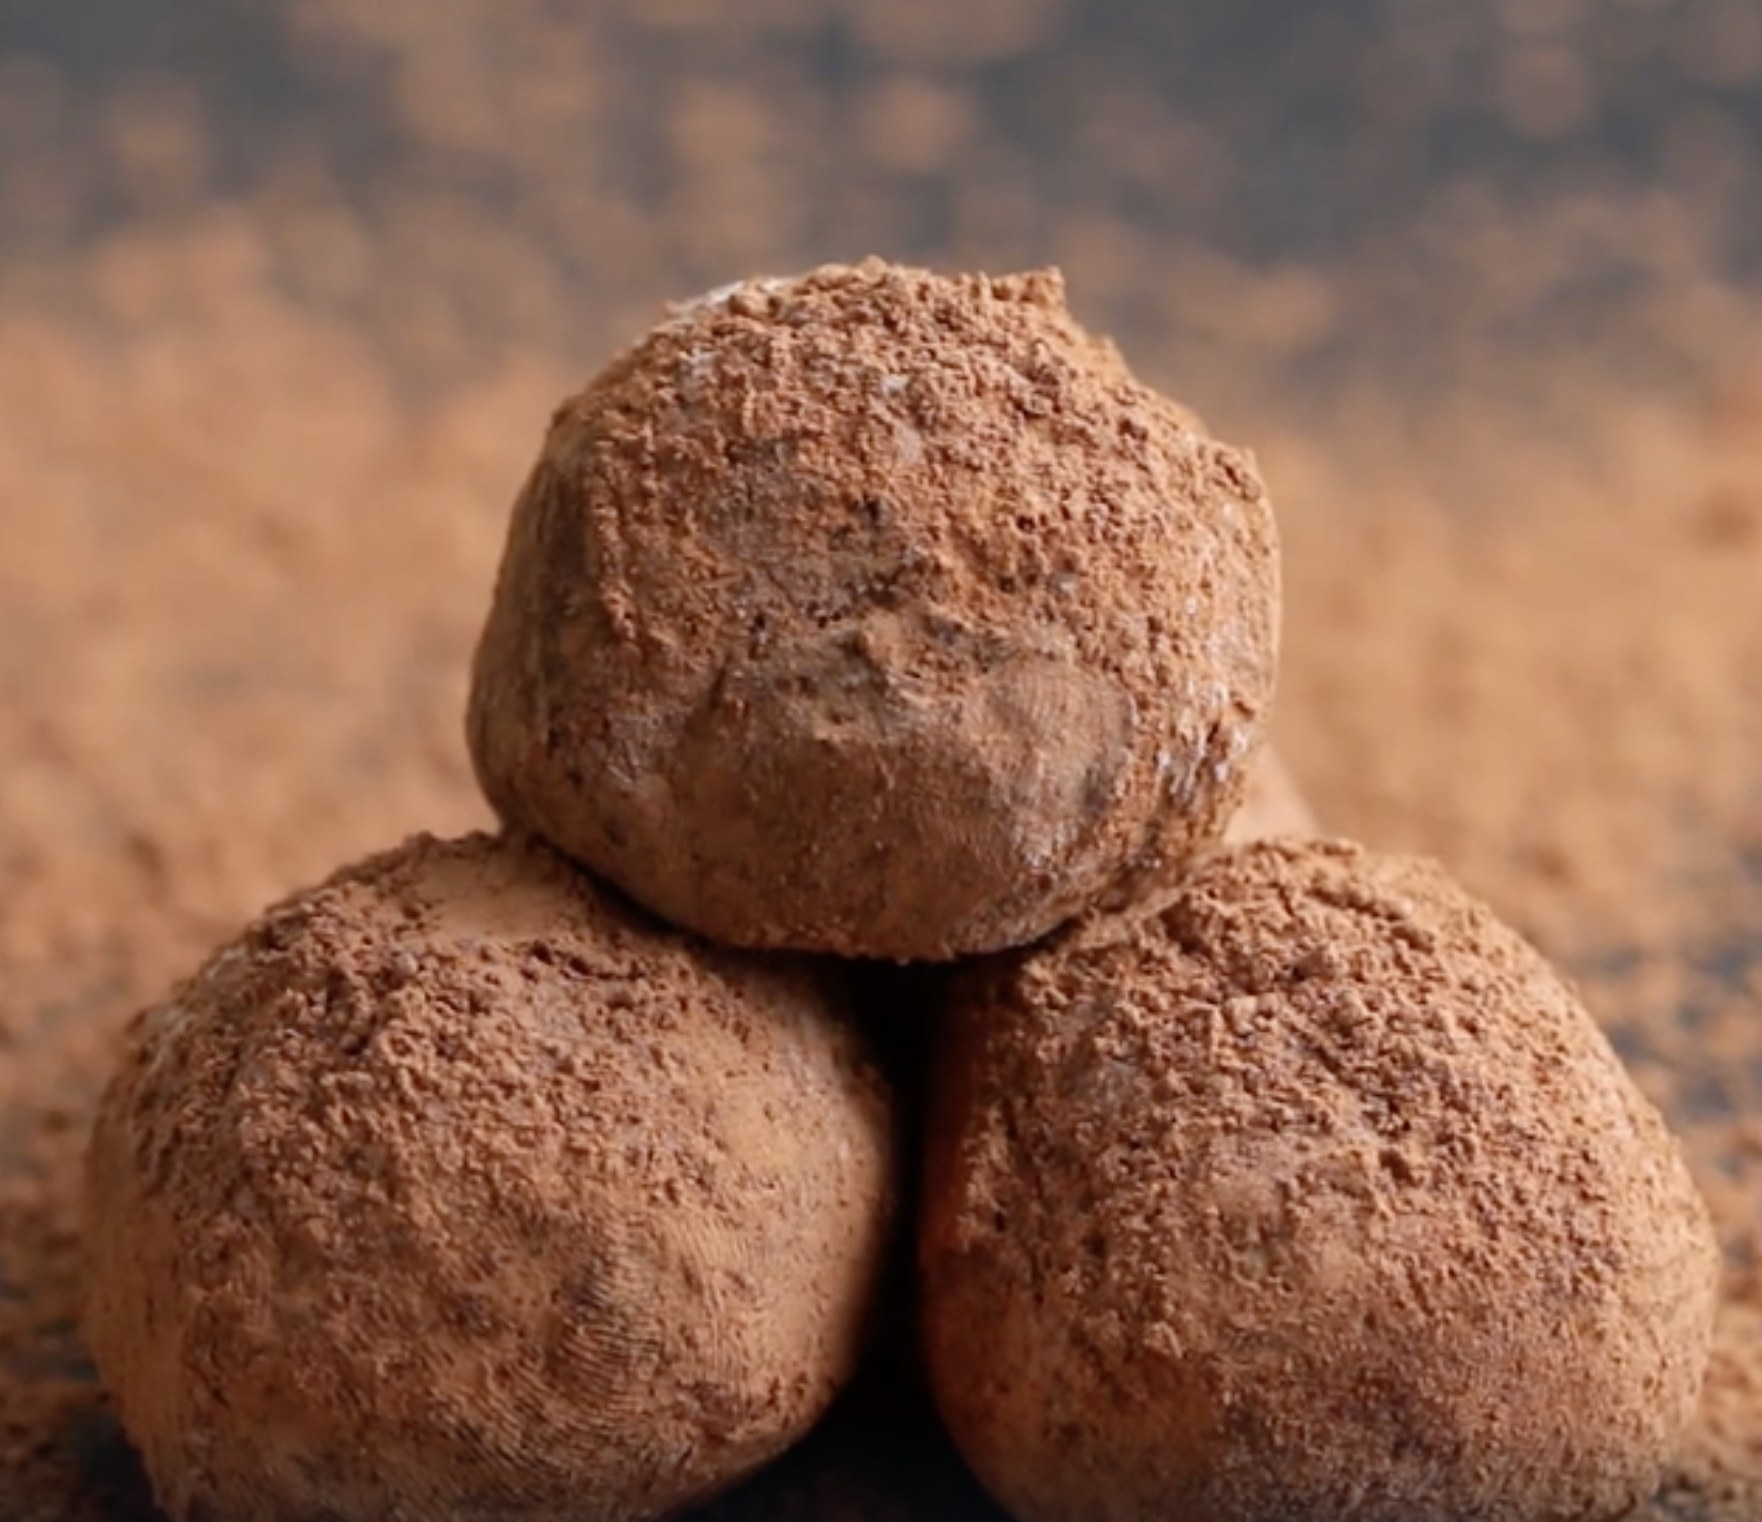 The chocolate truffles